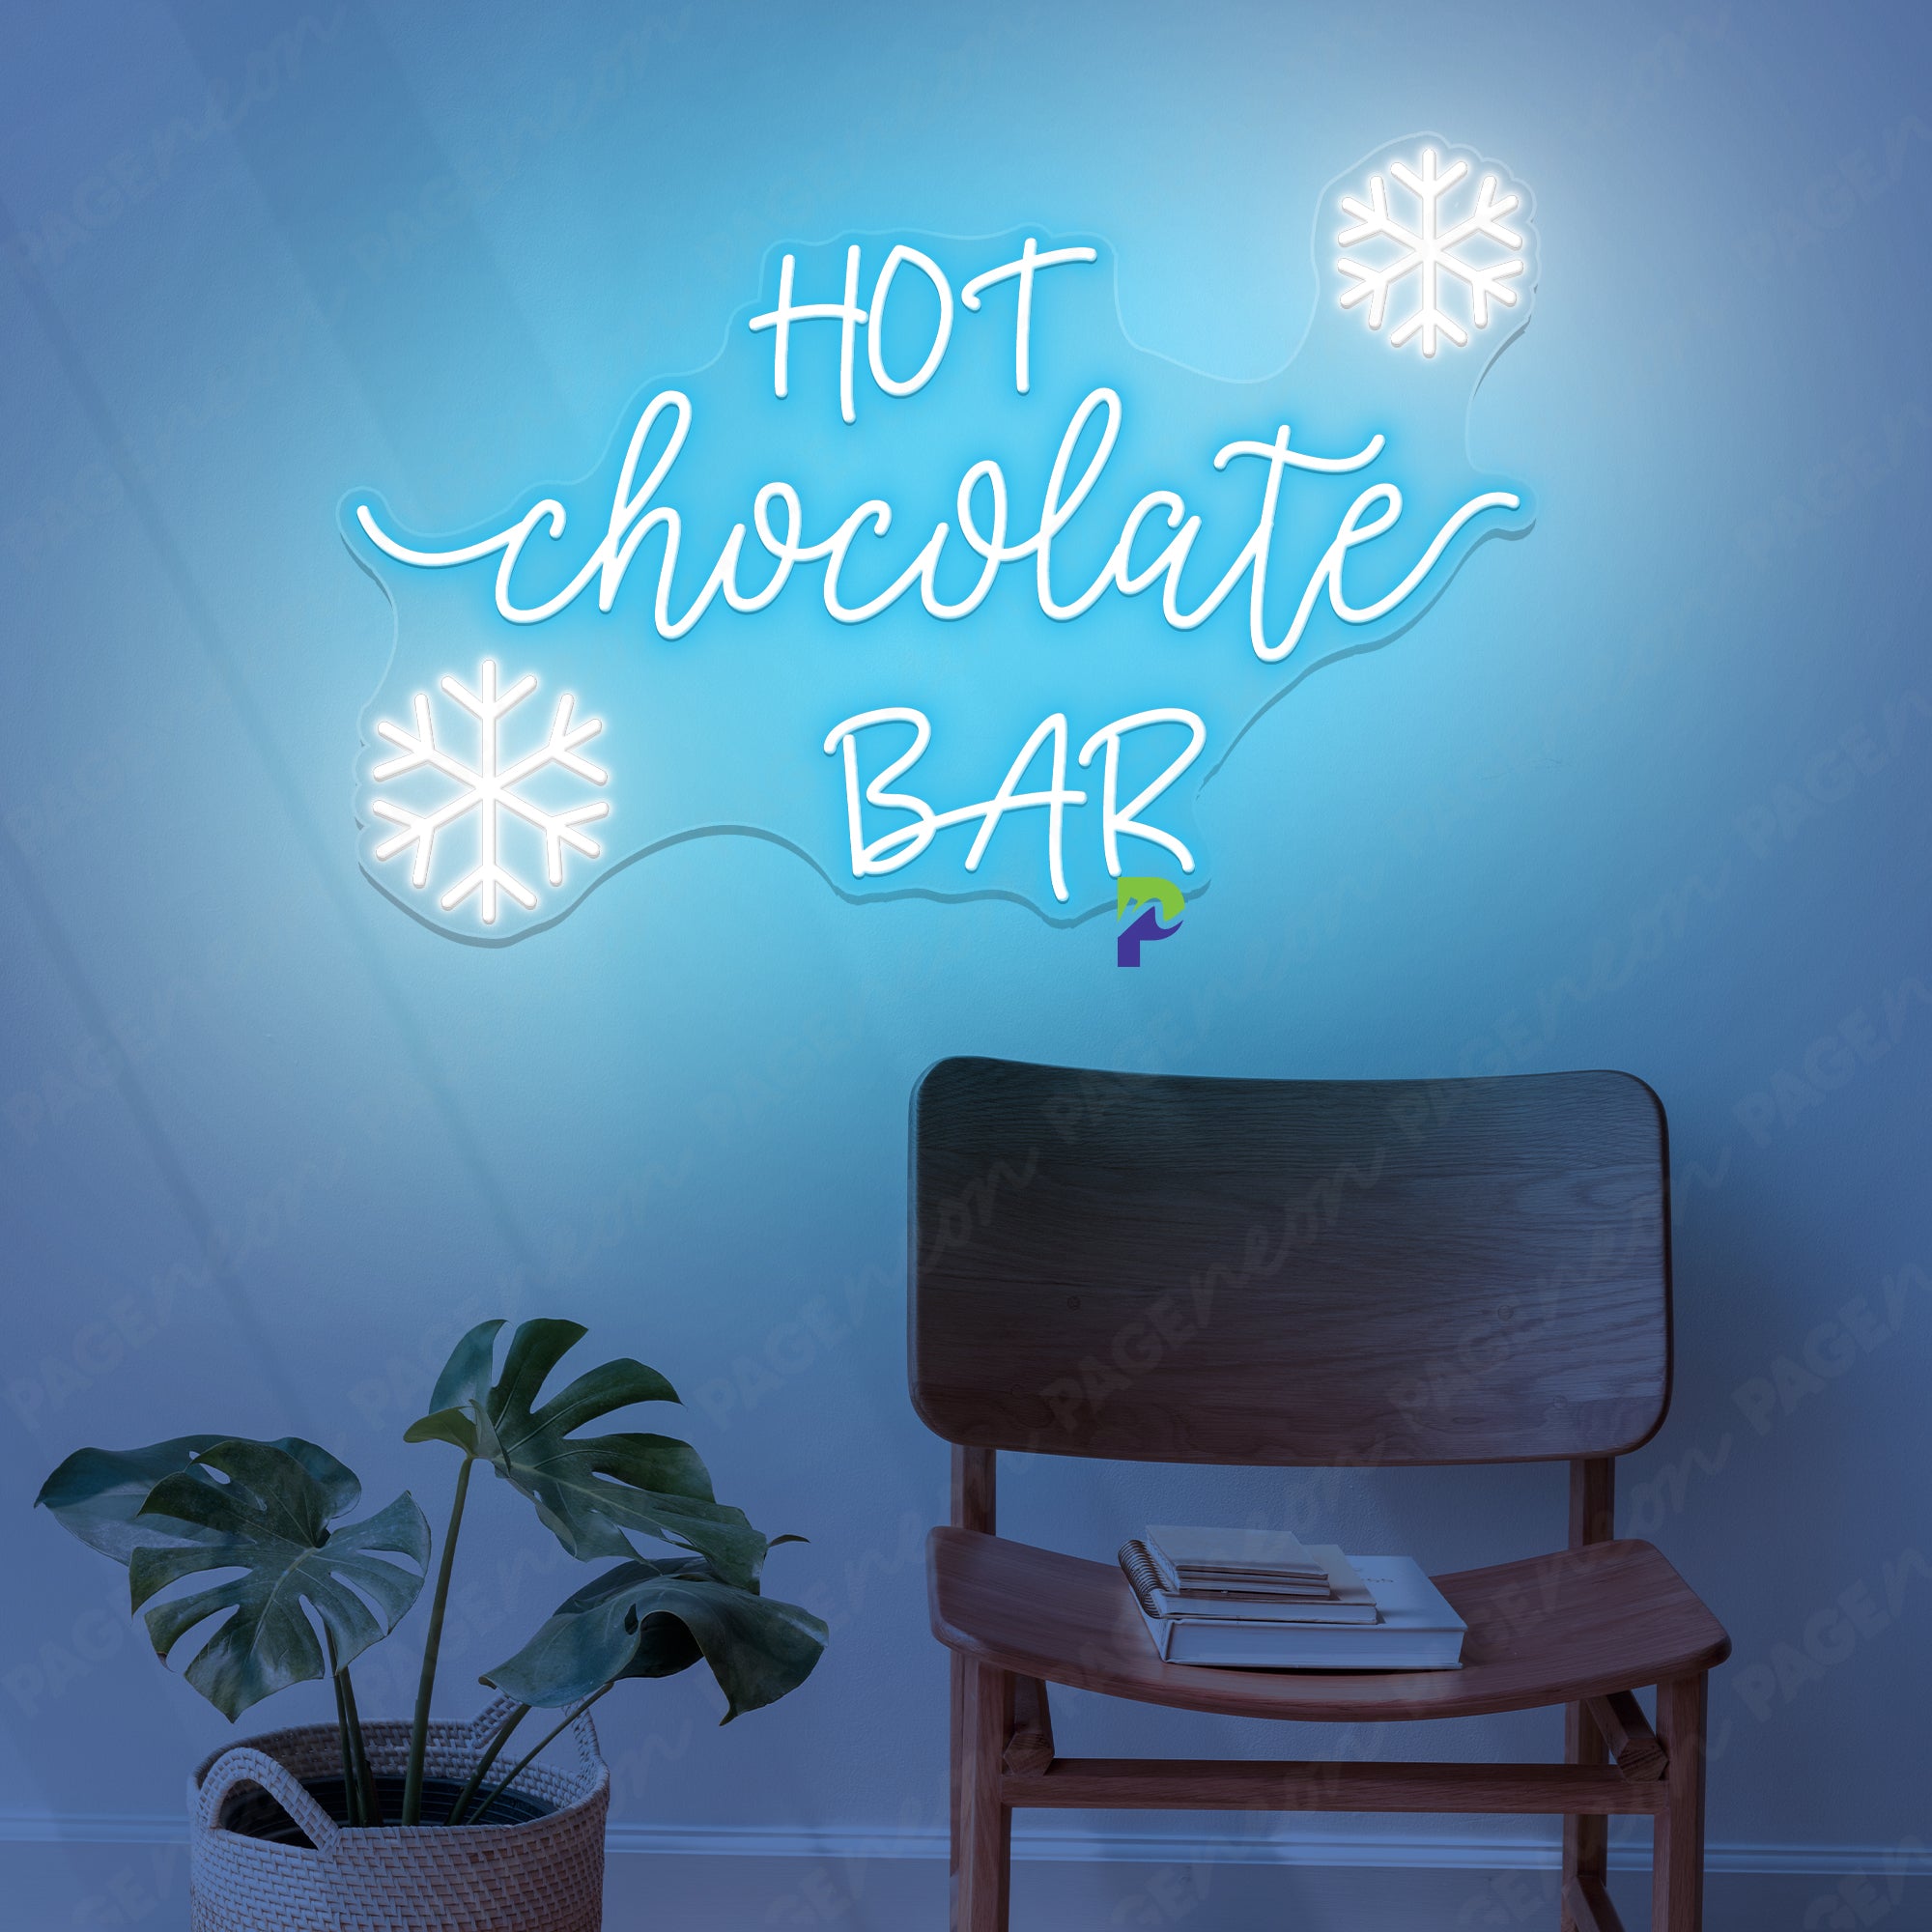 Hot Chocolate Bar Neon Sign Best Led Light For Cafe Shop